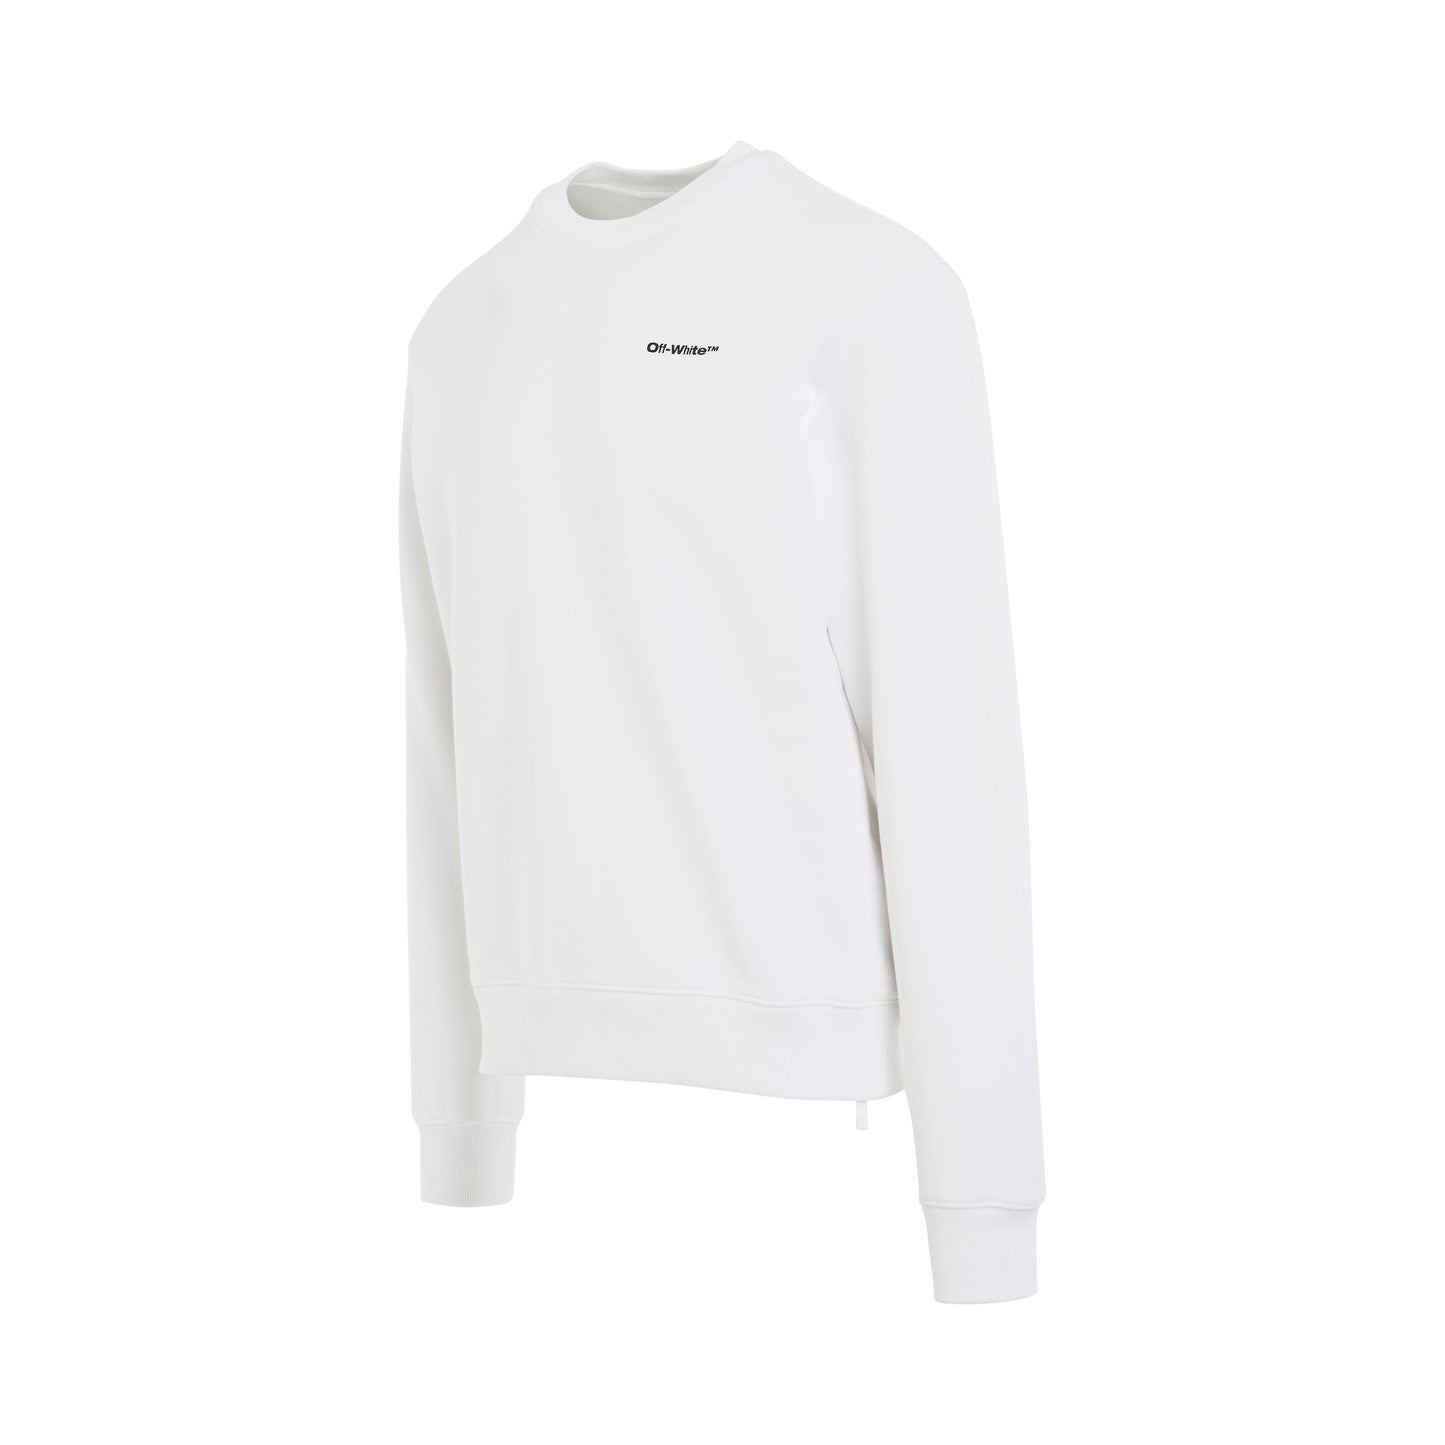 Wave Outline Diagonal Crewneck Sweatshirt in White/Black